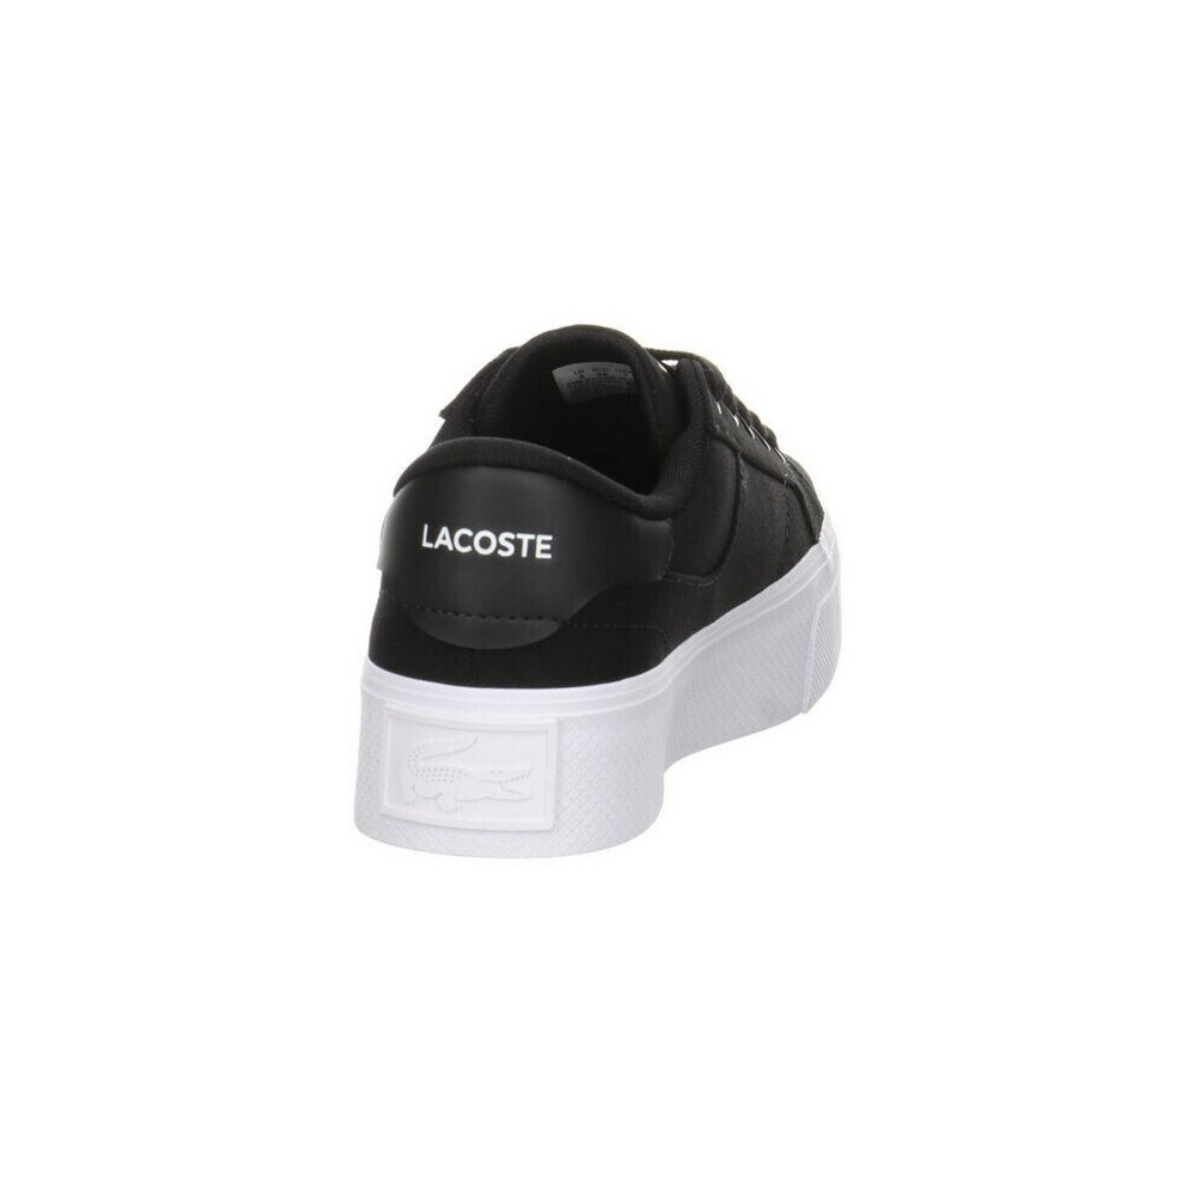 LACOSTE 7-45CFA0012312 ZIANE PLATFORM WMN'S (Medium) Black/White Leather & Synthetic Lifestyle Shoes